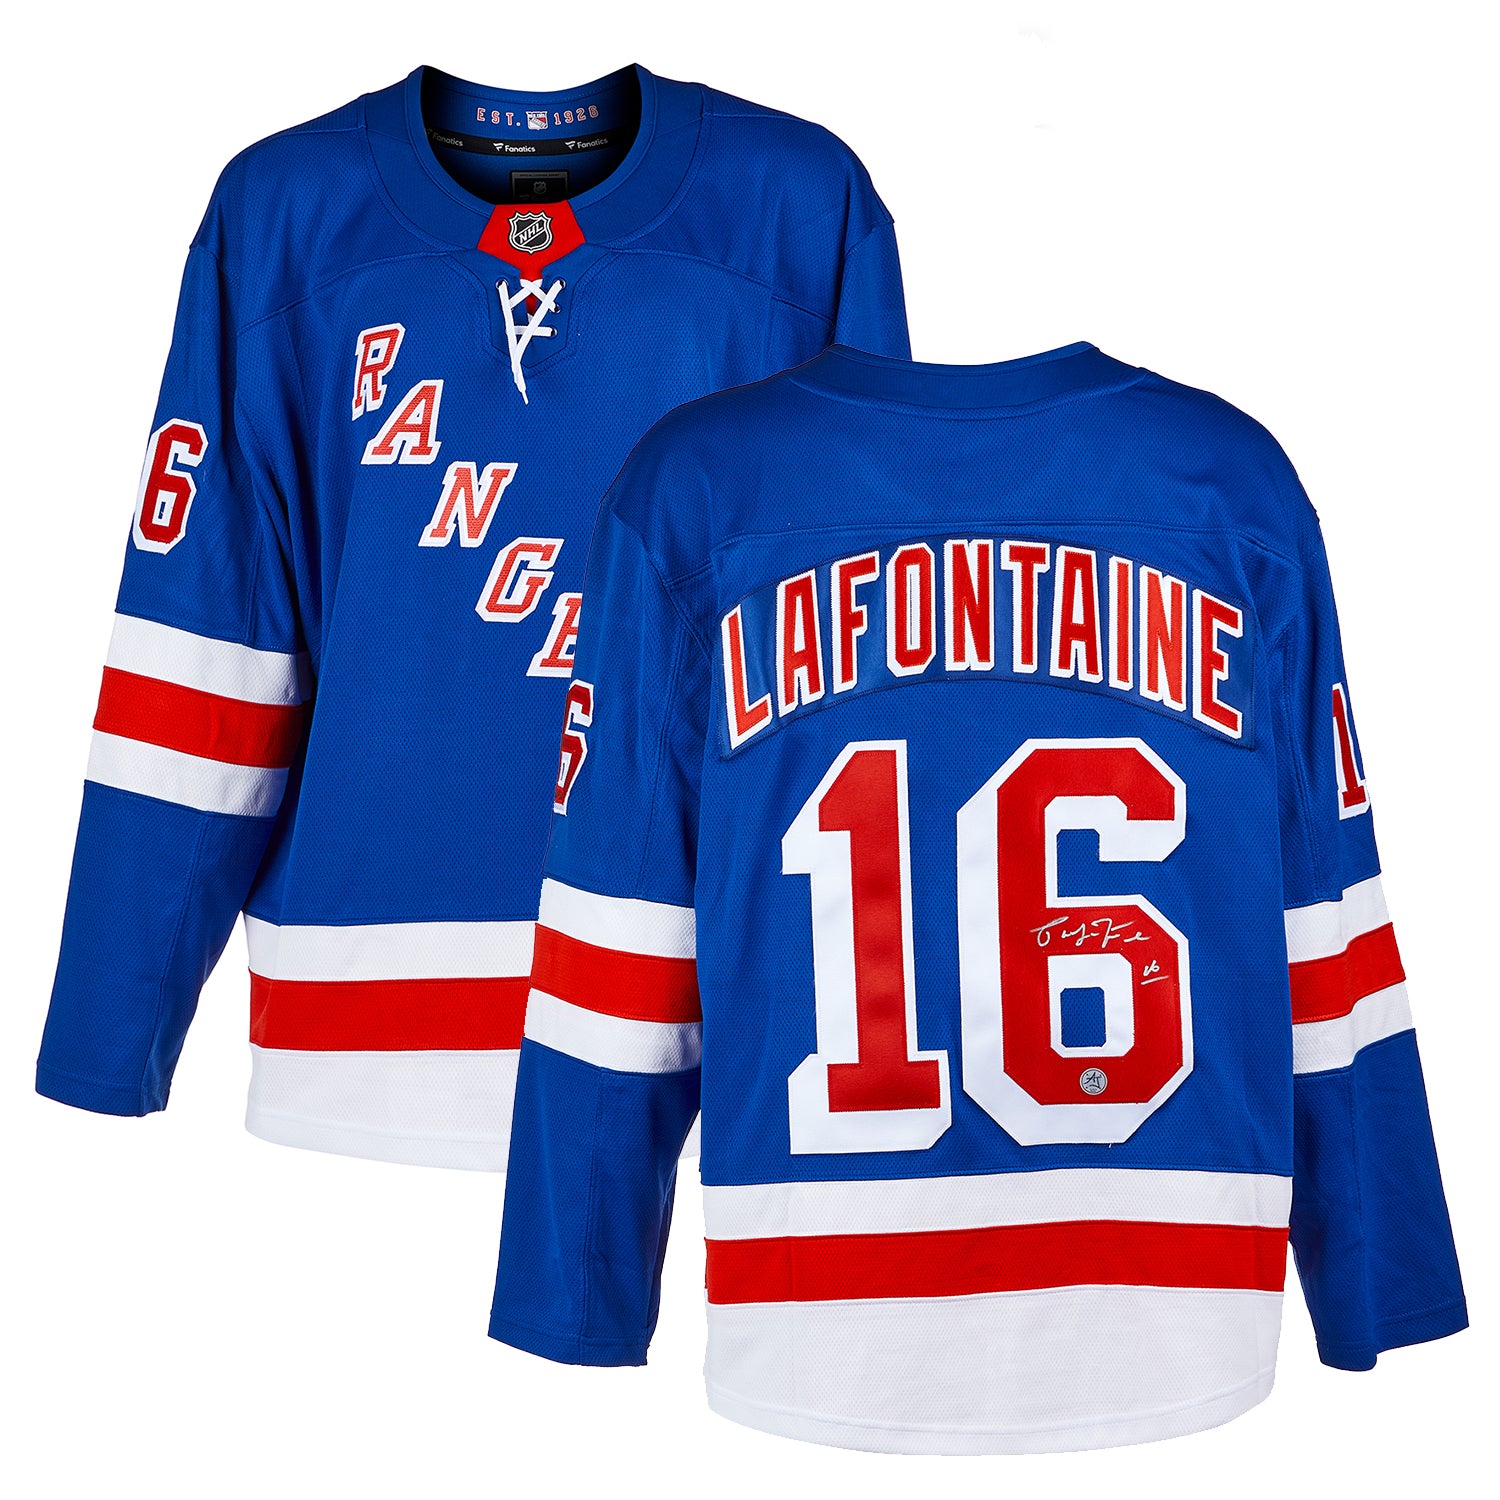 Pat LaFontaine Autographed New York Rangers Fanatics Jersey